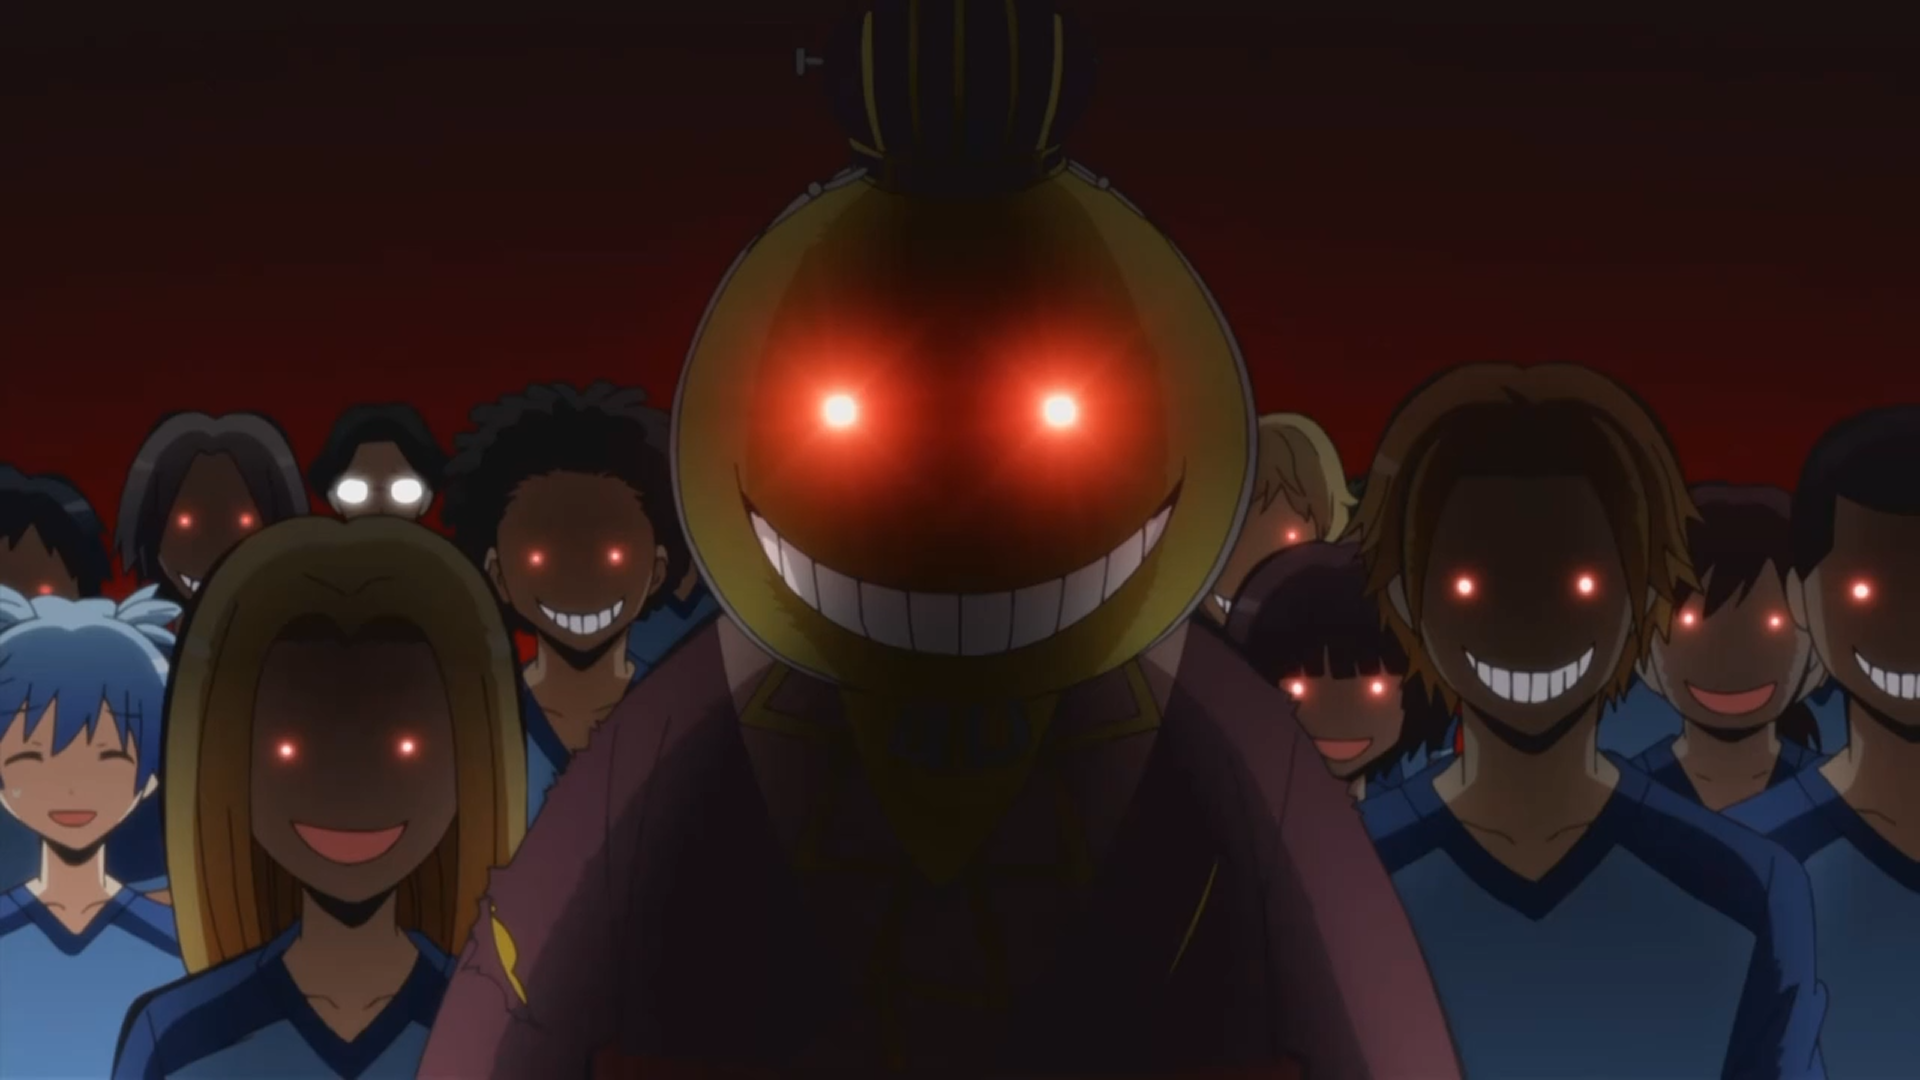 Anime 1920x1080 Ansatsu Kyoushitsu evil Koro-sensei anime smiling creepy red eyes glowing eyes anime boys anime girls